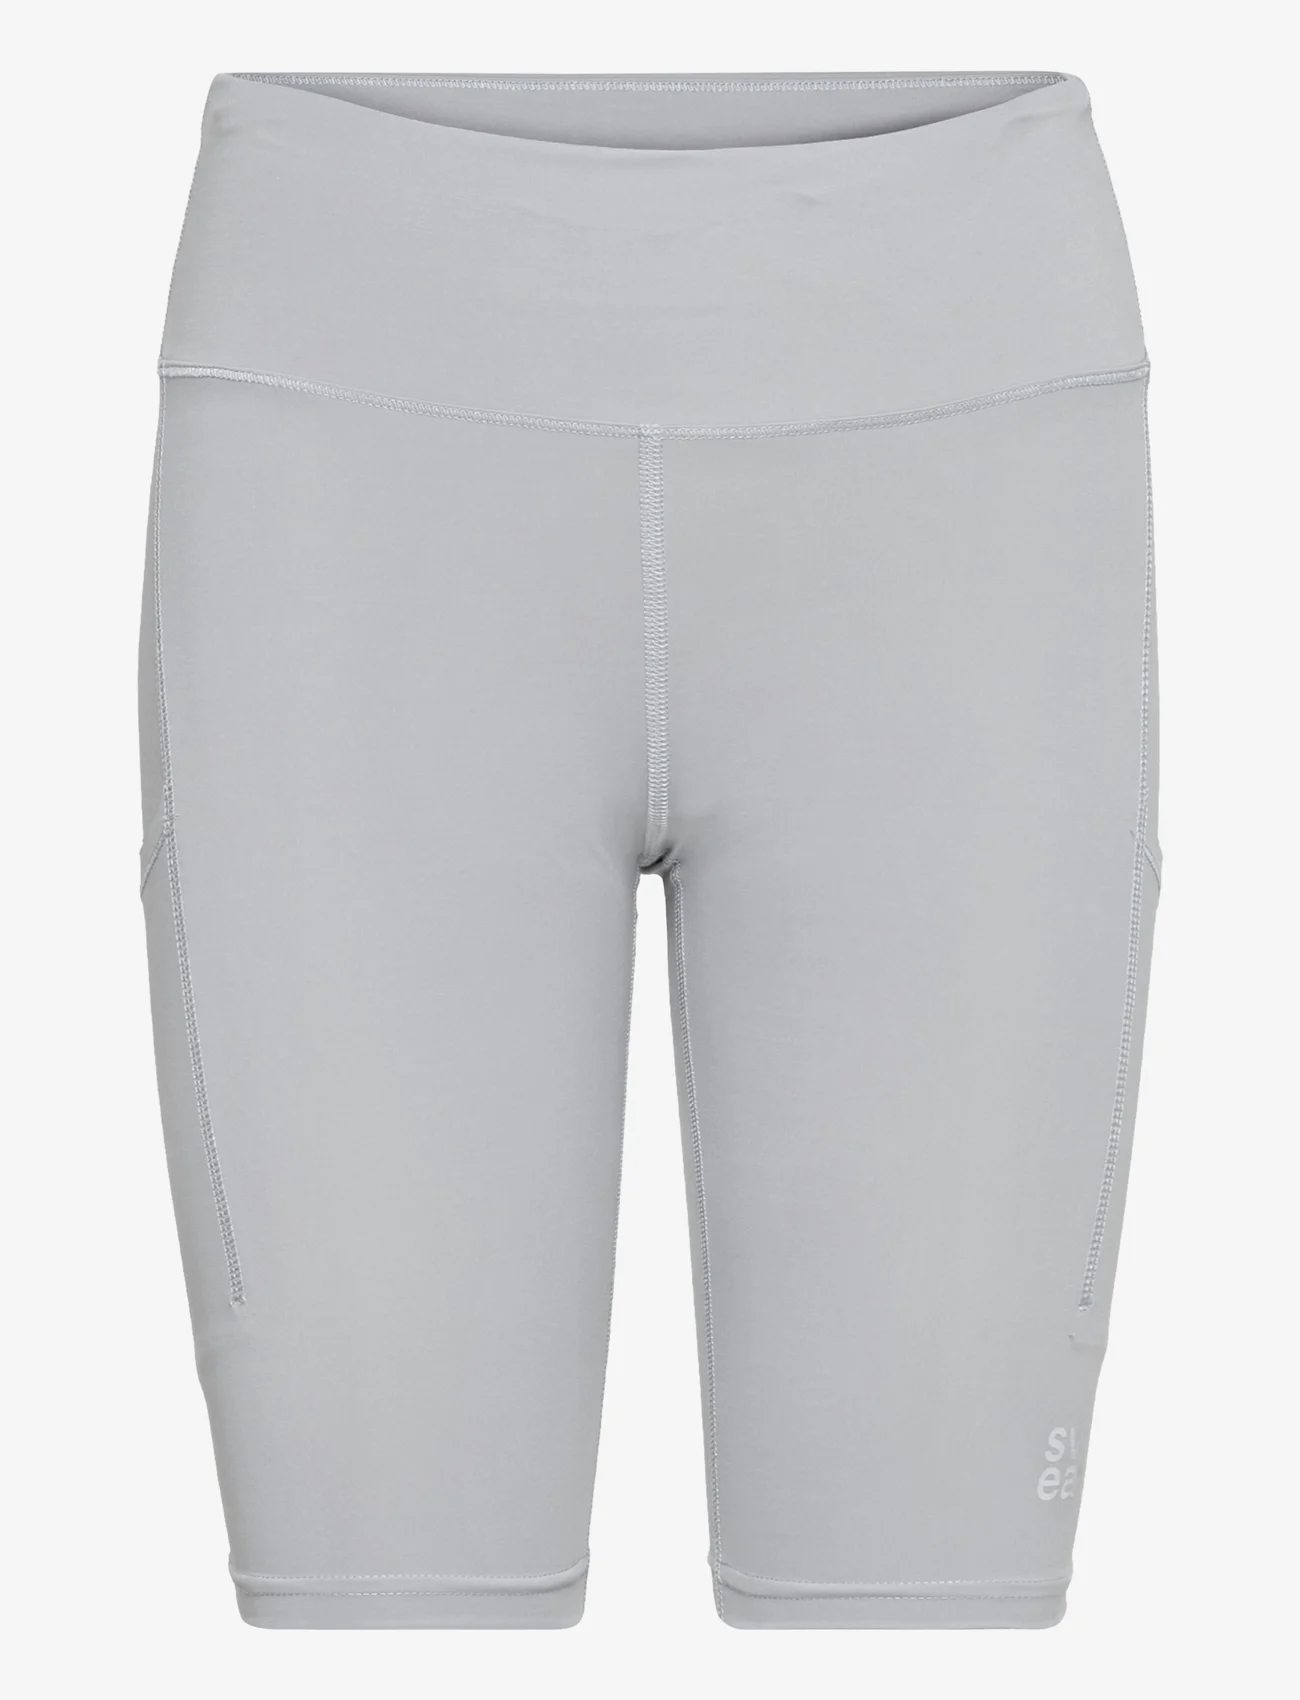 Svea - W. Sporty Seam Shorts - cykelbyxor - light grey - 0